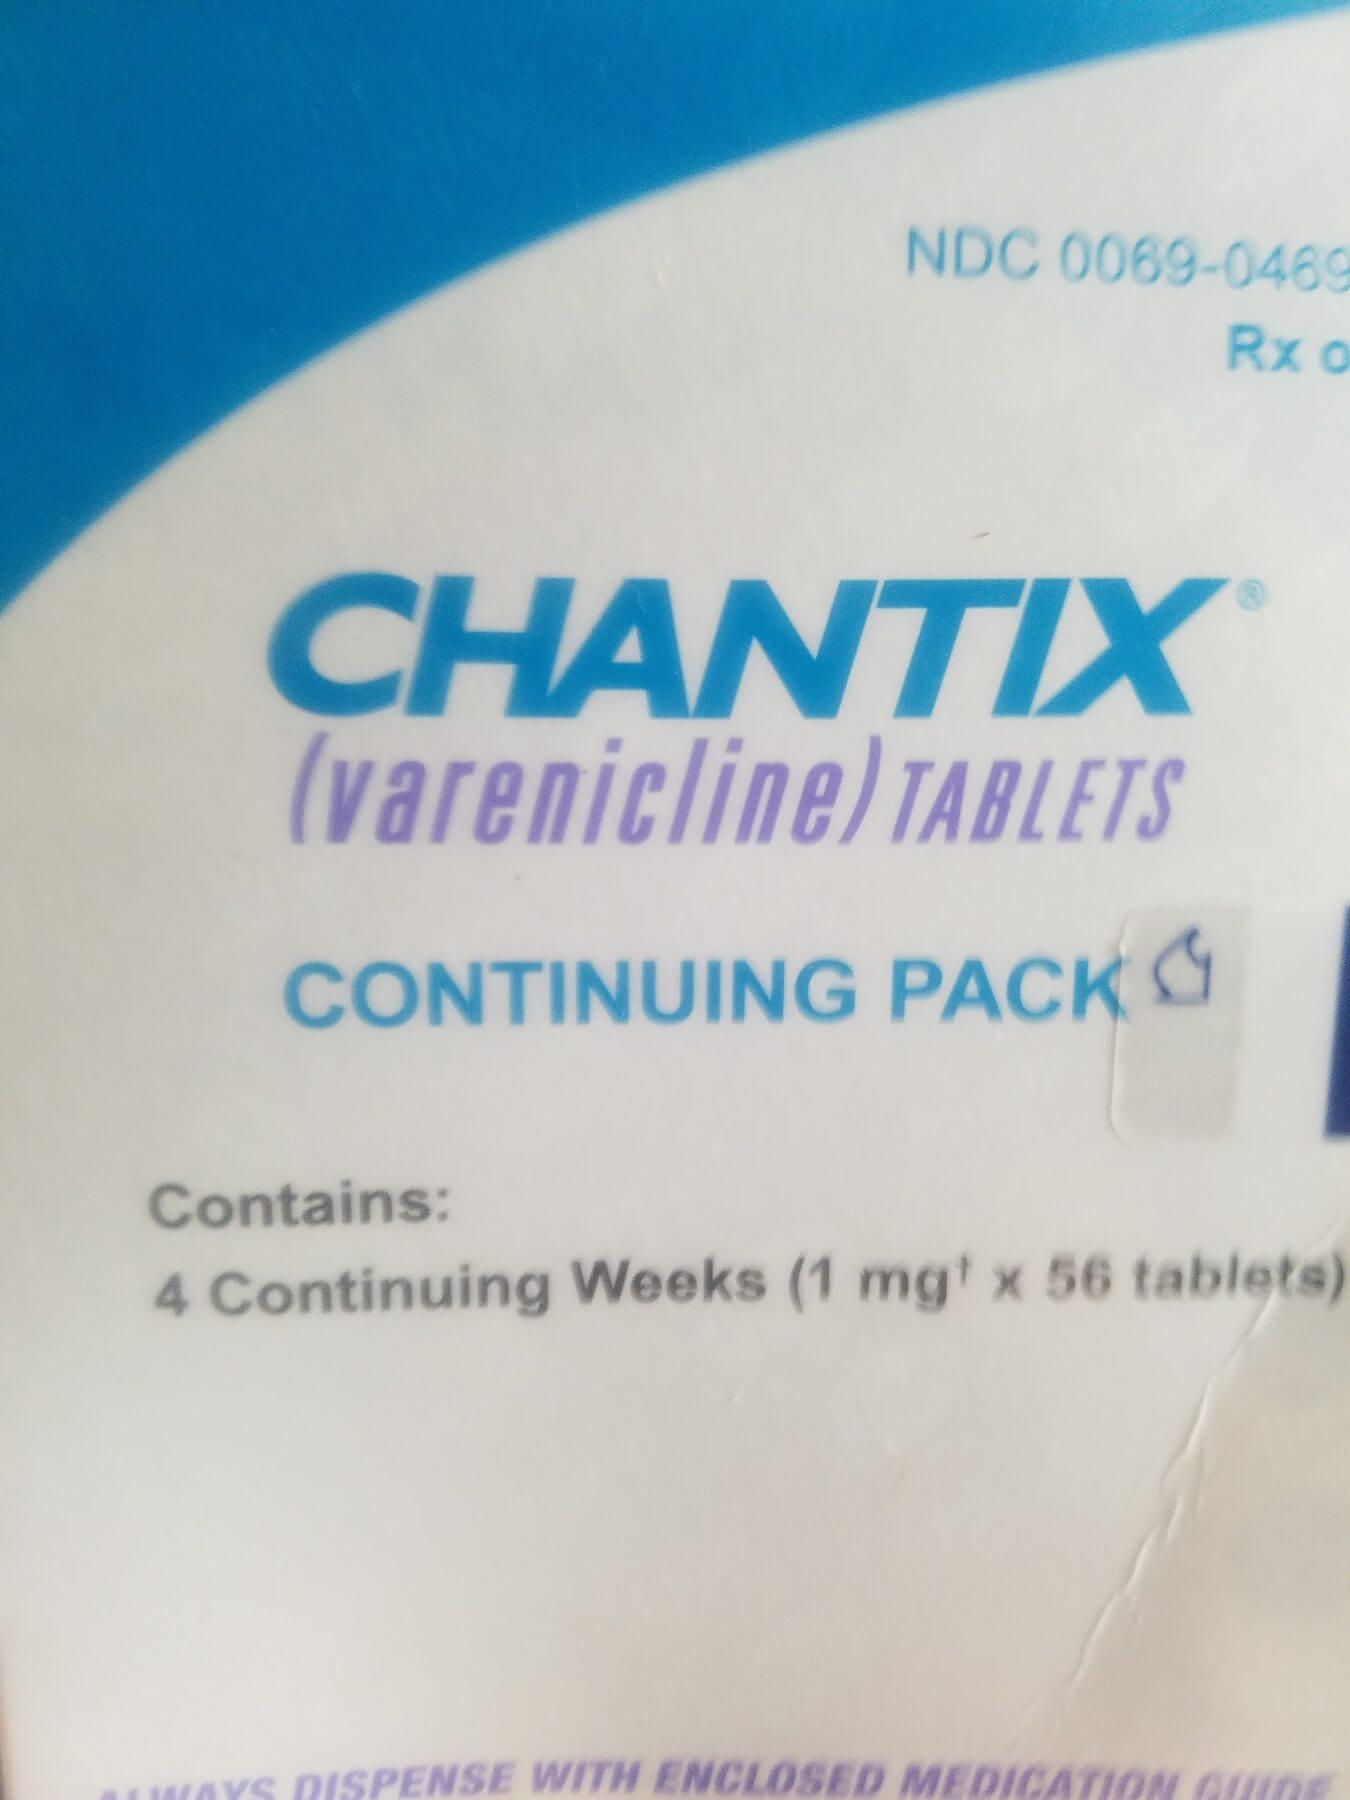 Chantix Logo - Quit Smoking Guaranteed in TWO WEEKS with Chantix